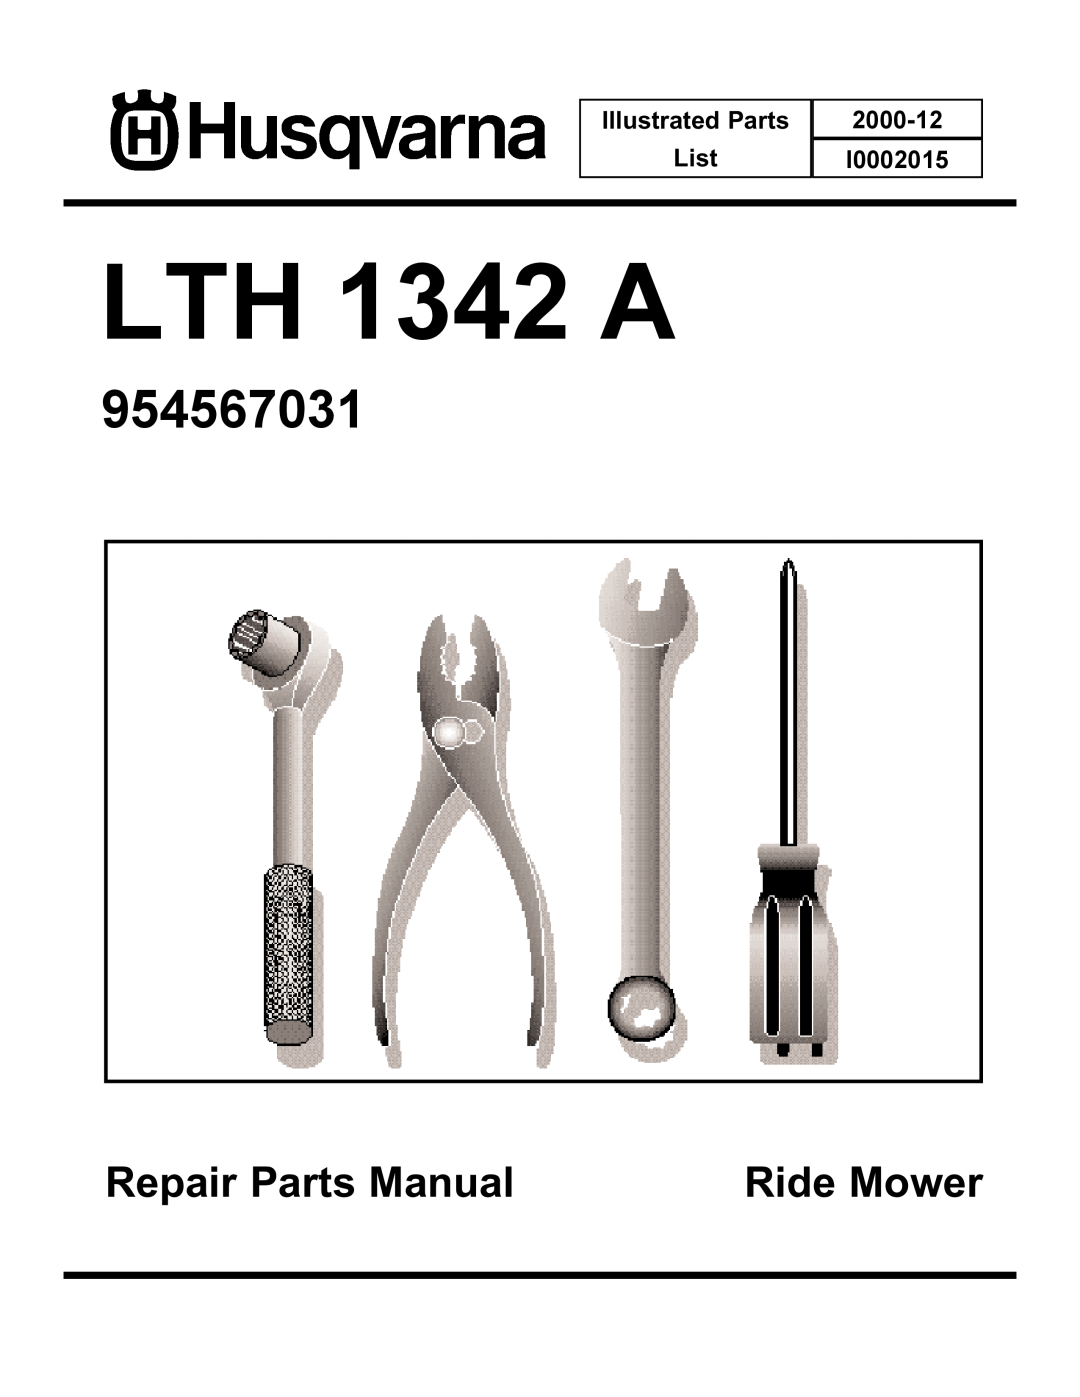 Husqvarna LTH1342A manual LTH 1342 A, 954567031, Repair Parts Manual, Ride Mower, Illustrated Parts List, 2000-12 I0002015 